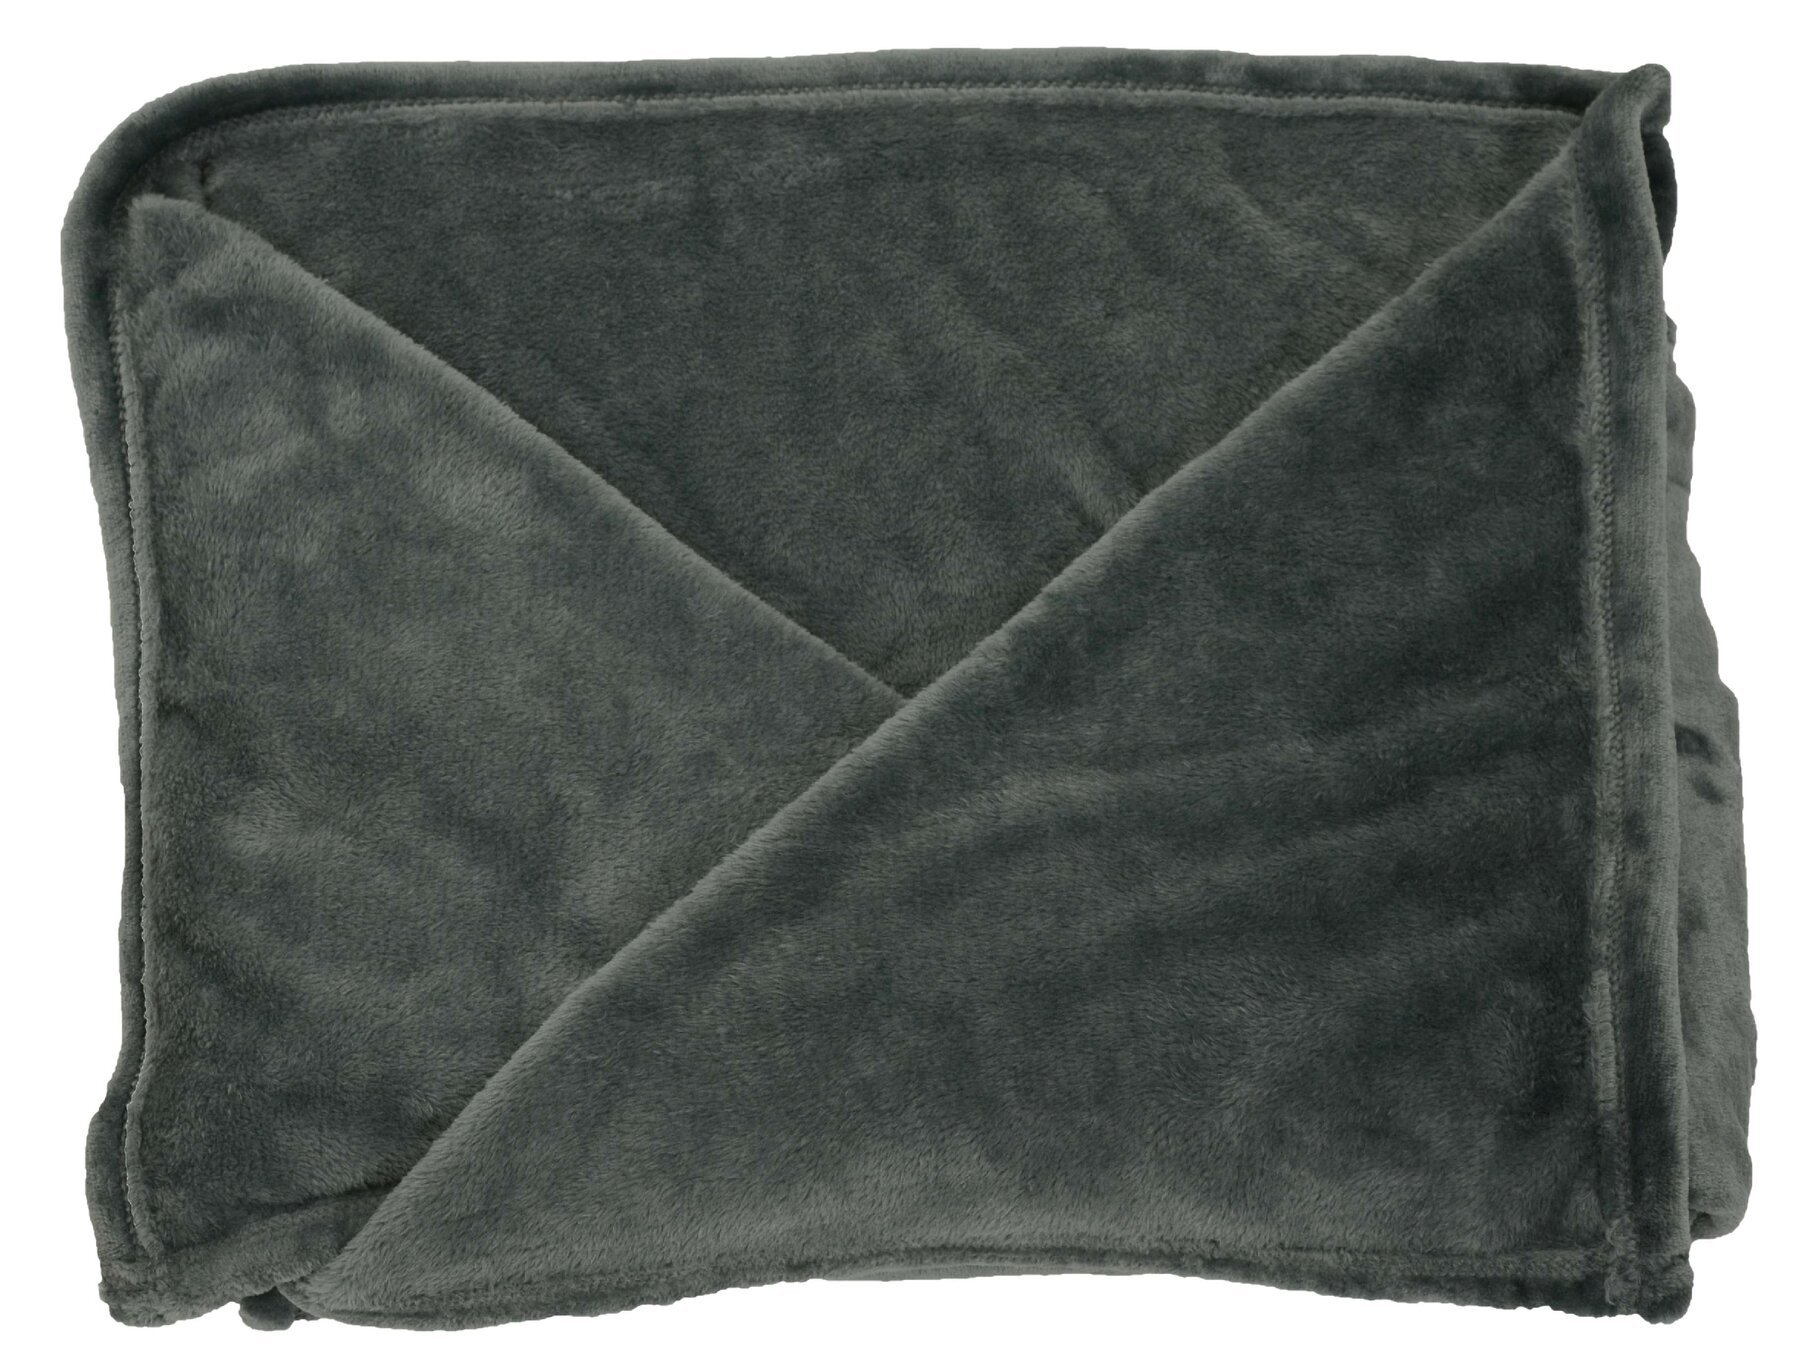 Snuggle blanket Snuggle fleece blanket XL with sleeves grey 170x200cm